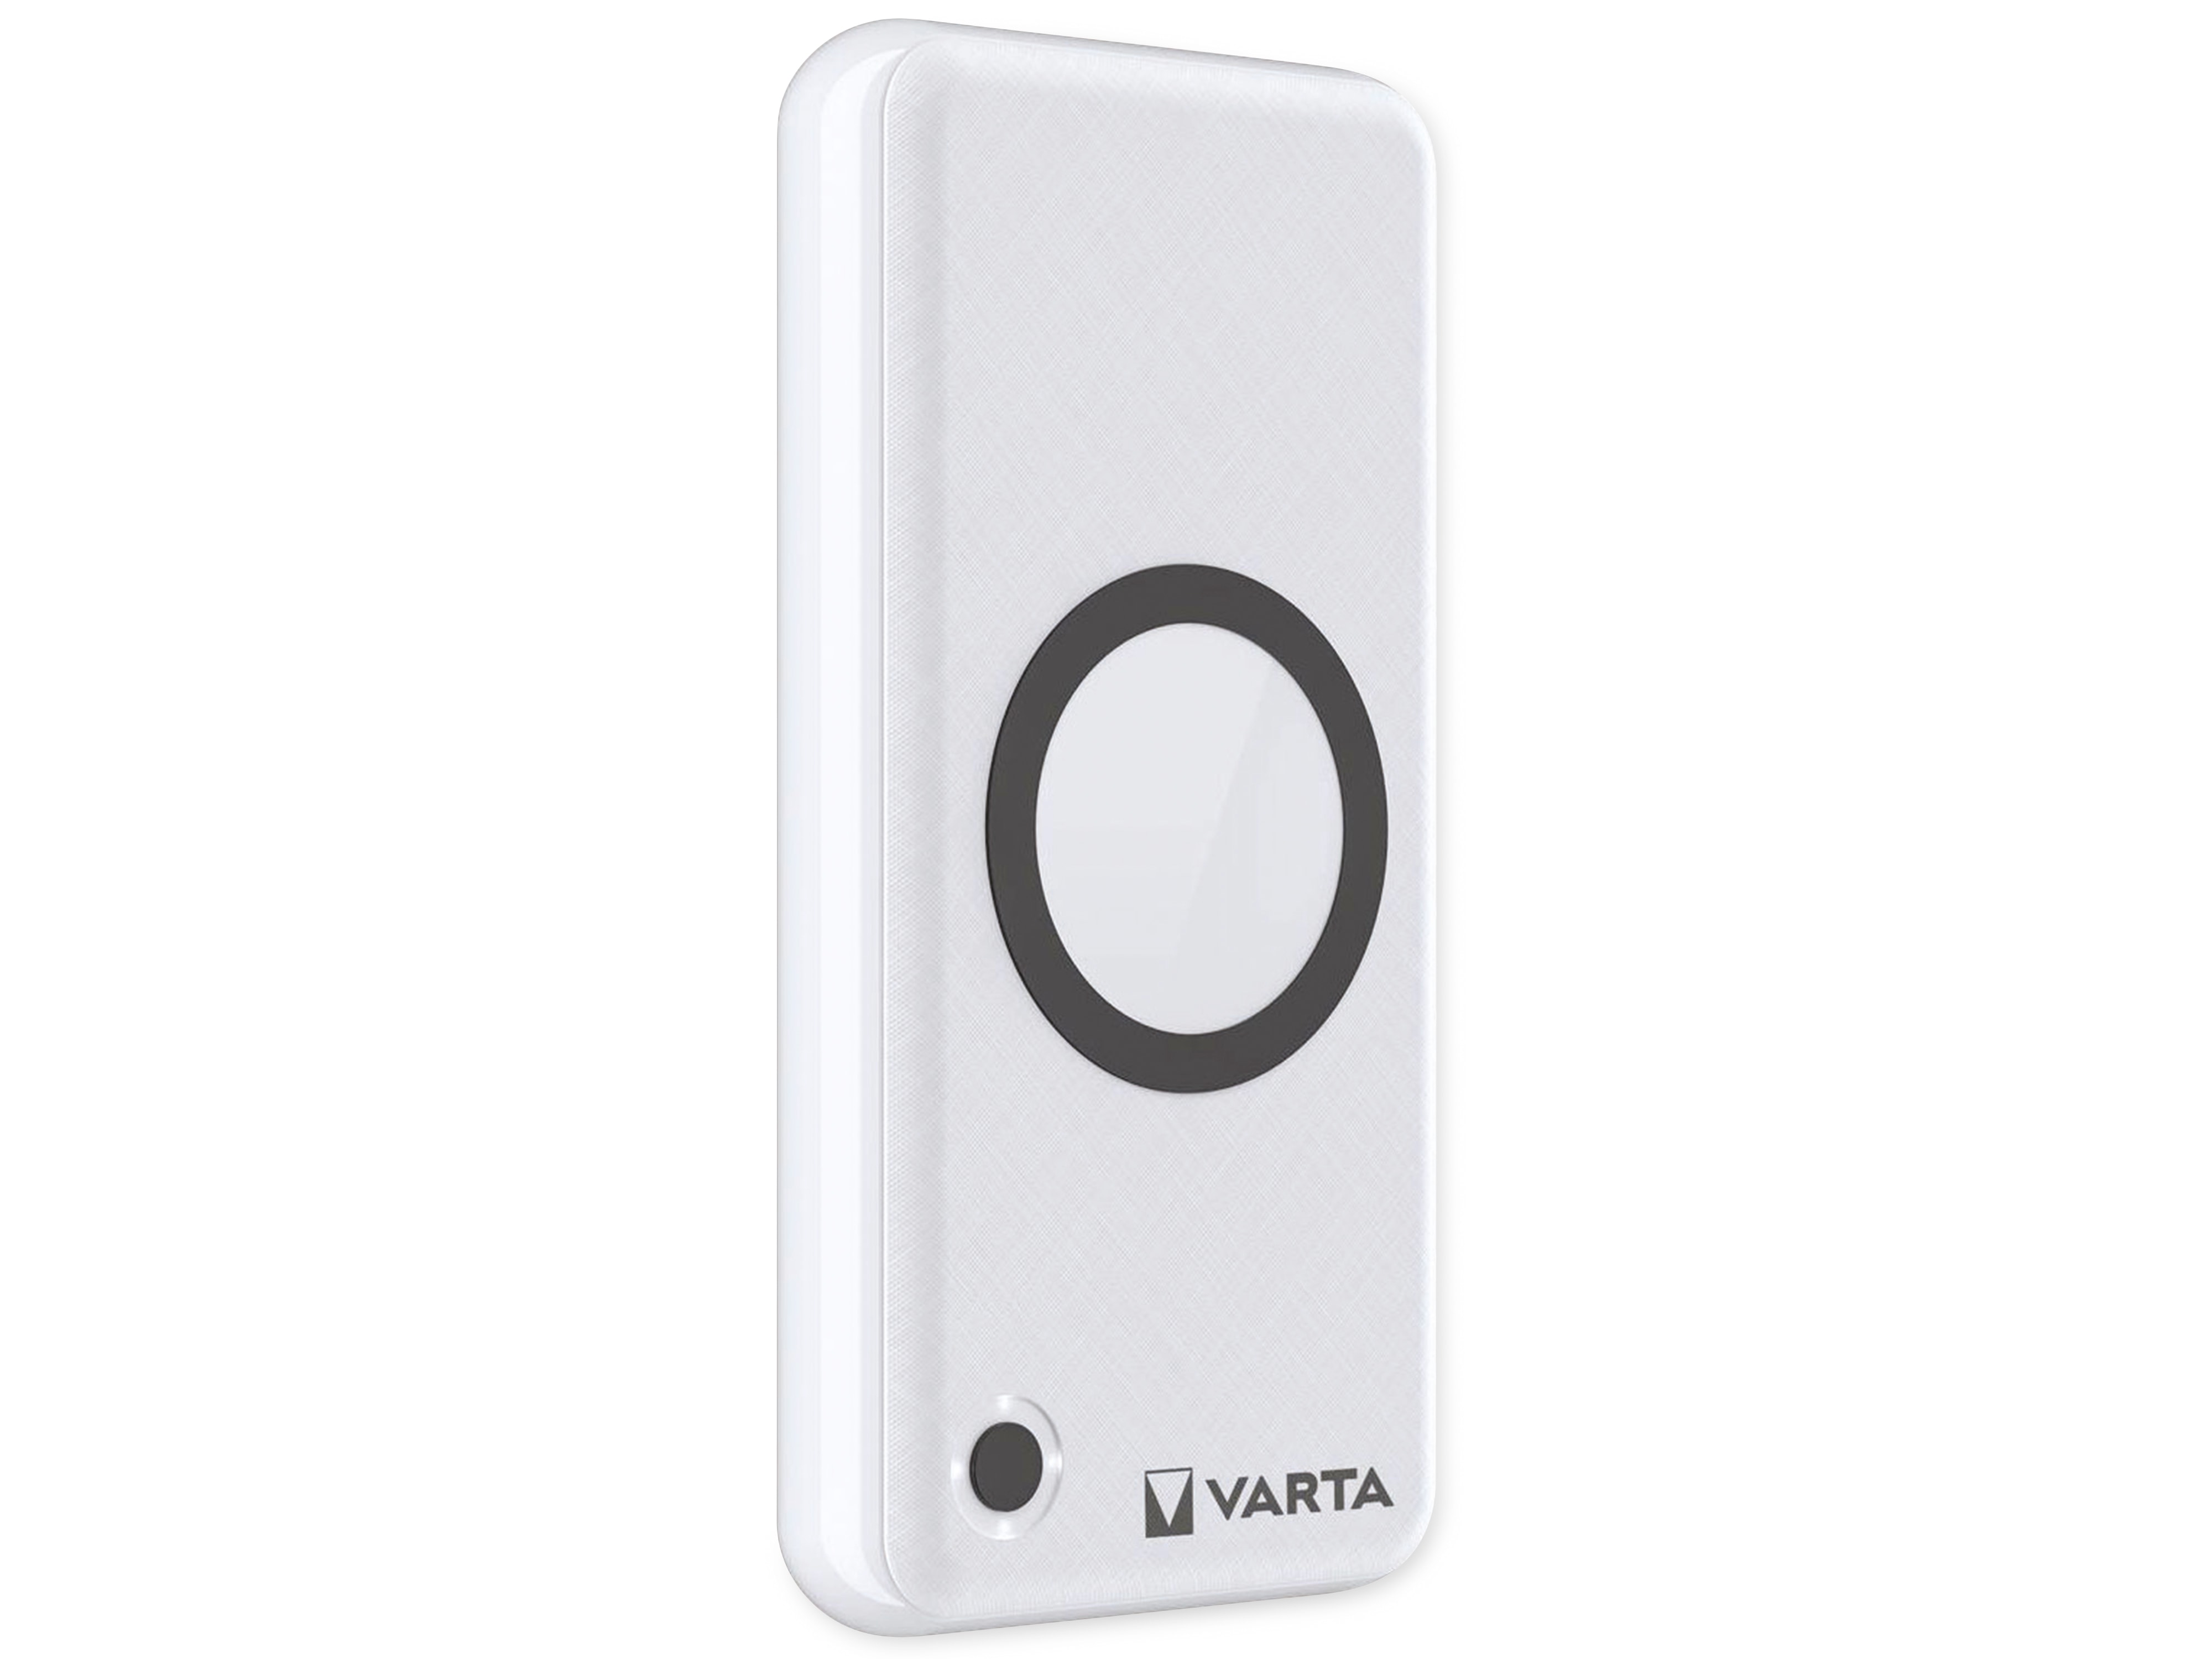 VARTA USB-Powerbank Wireless, 10.000mAh, mit Ladekabel